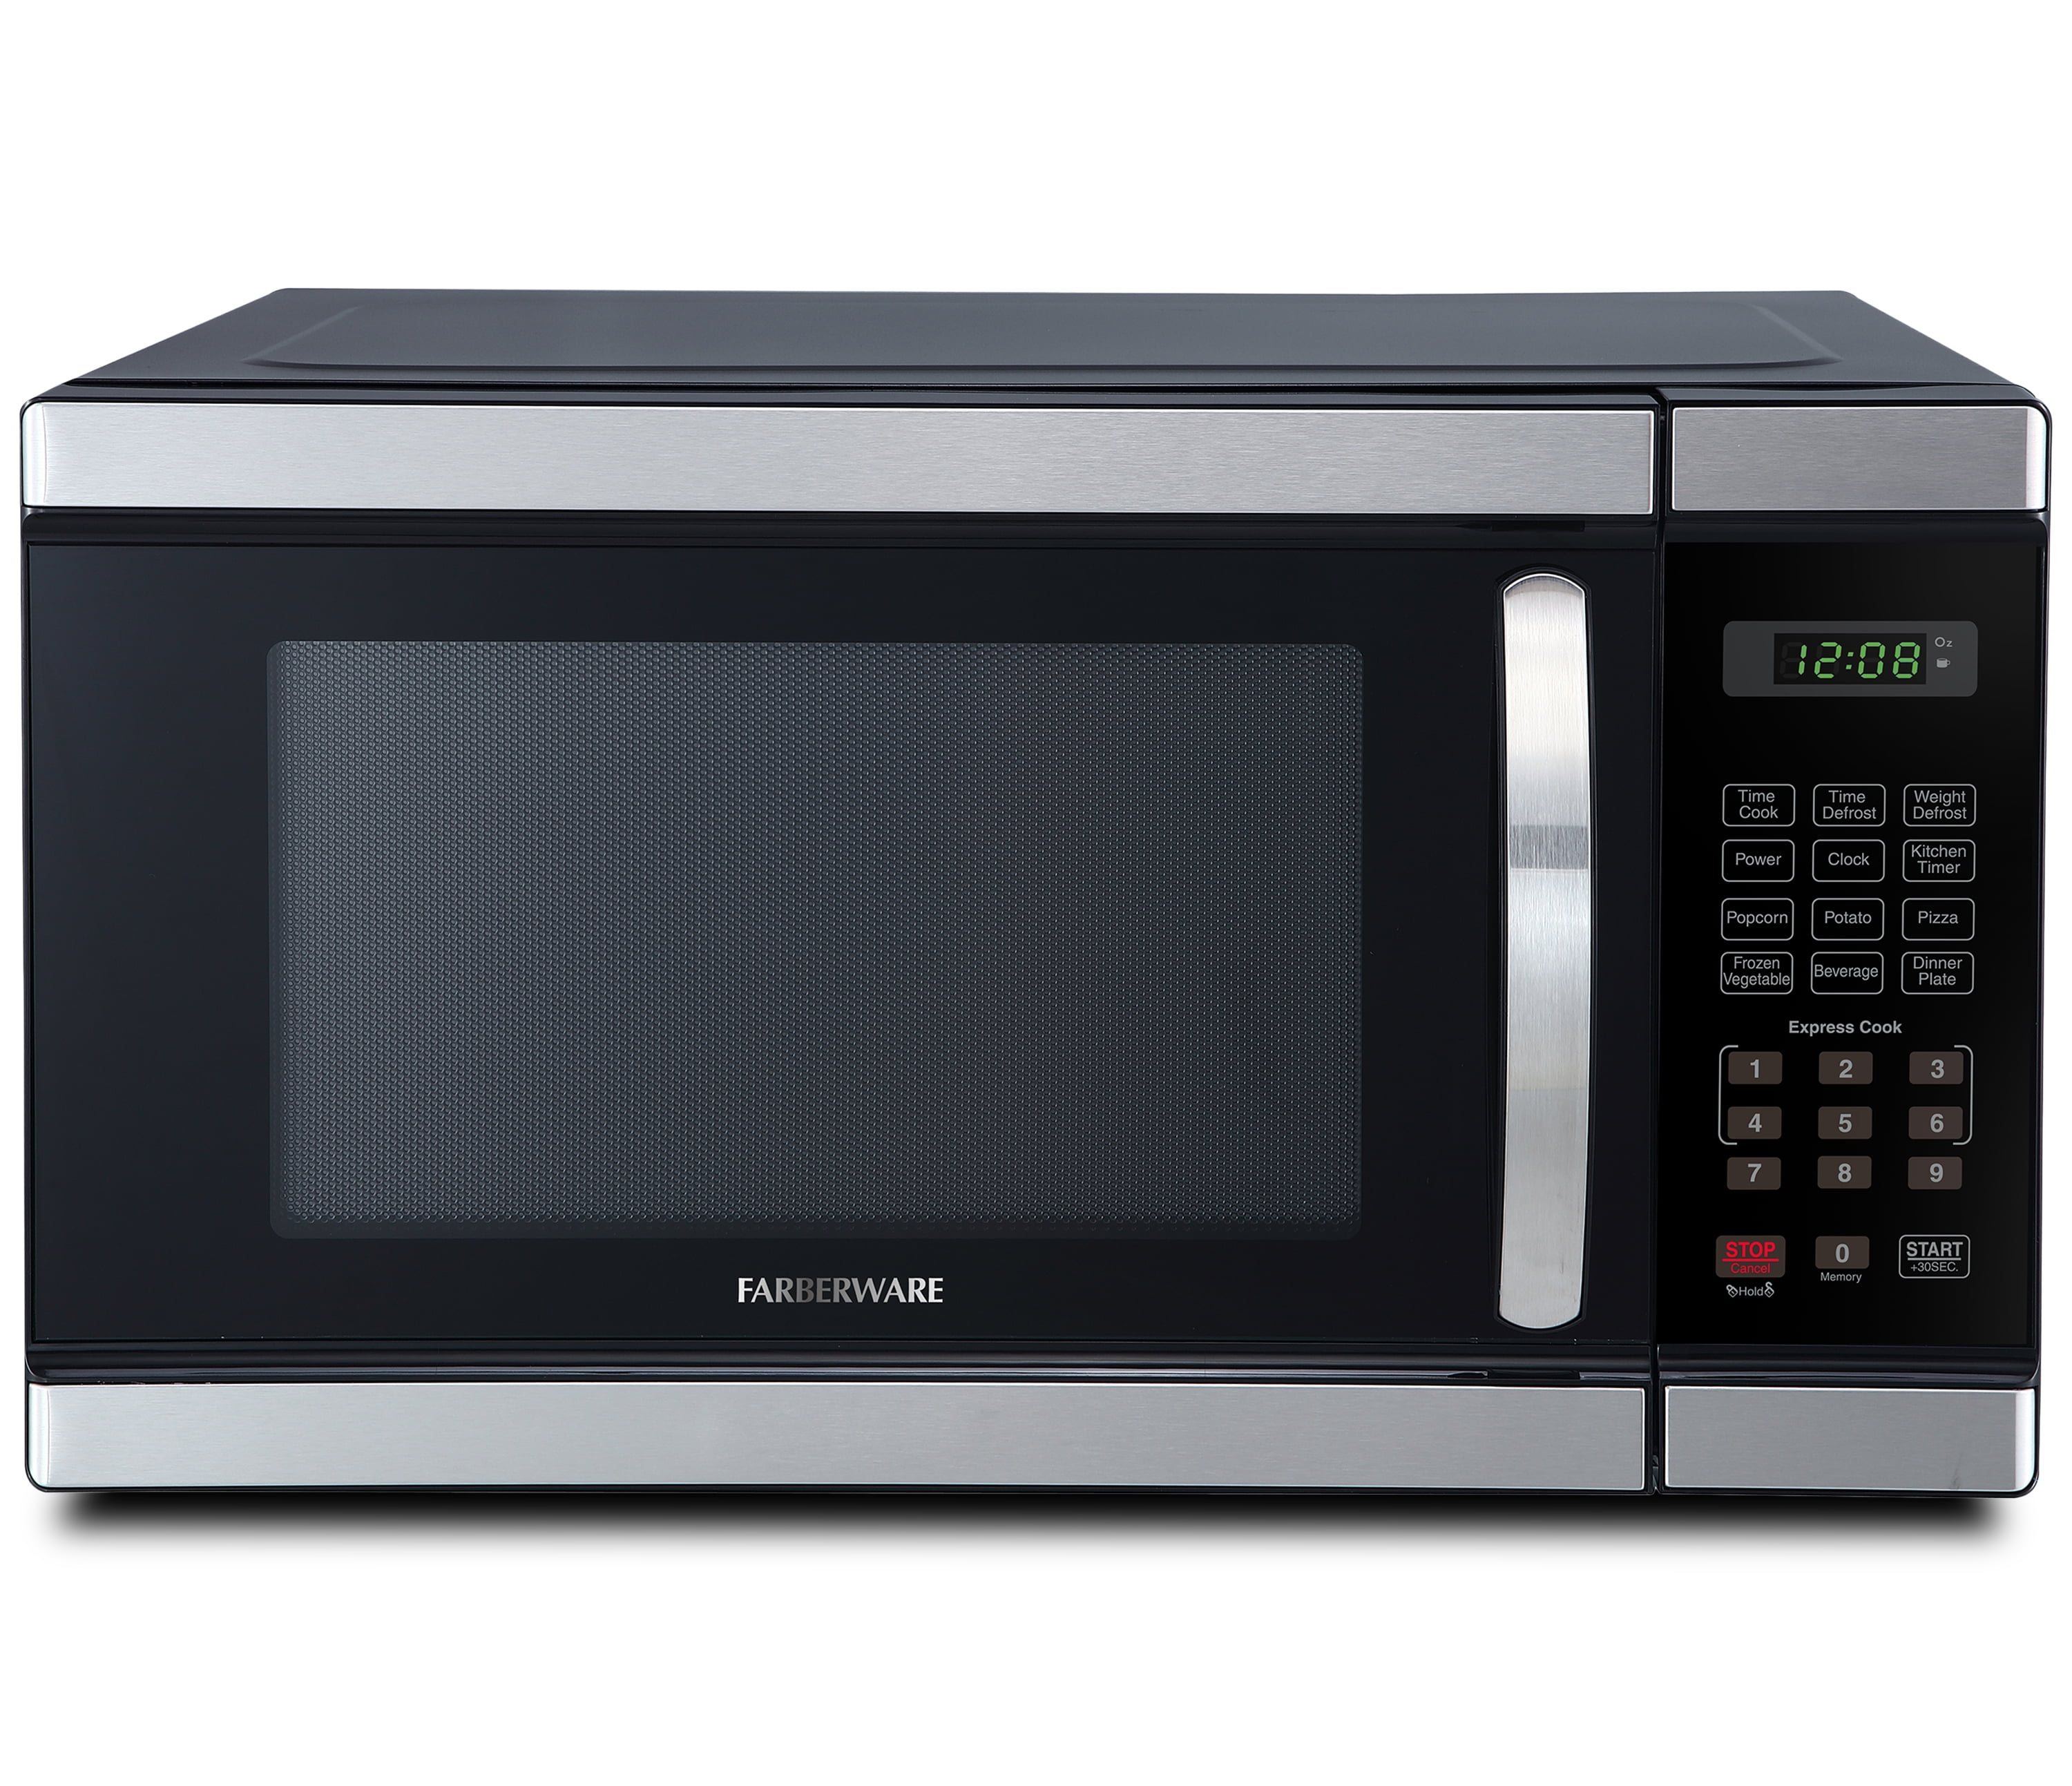 Farberware Professional 1.1 Cu. ft 1000-Watt Microwave Oven Stainless Steel Fmo11ahtbkm